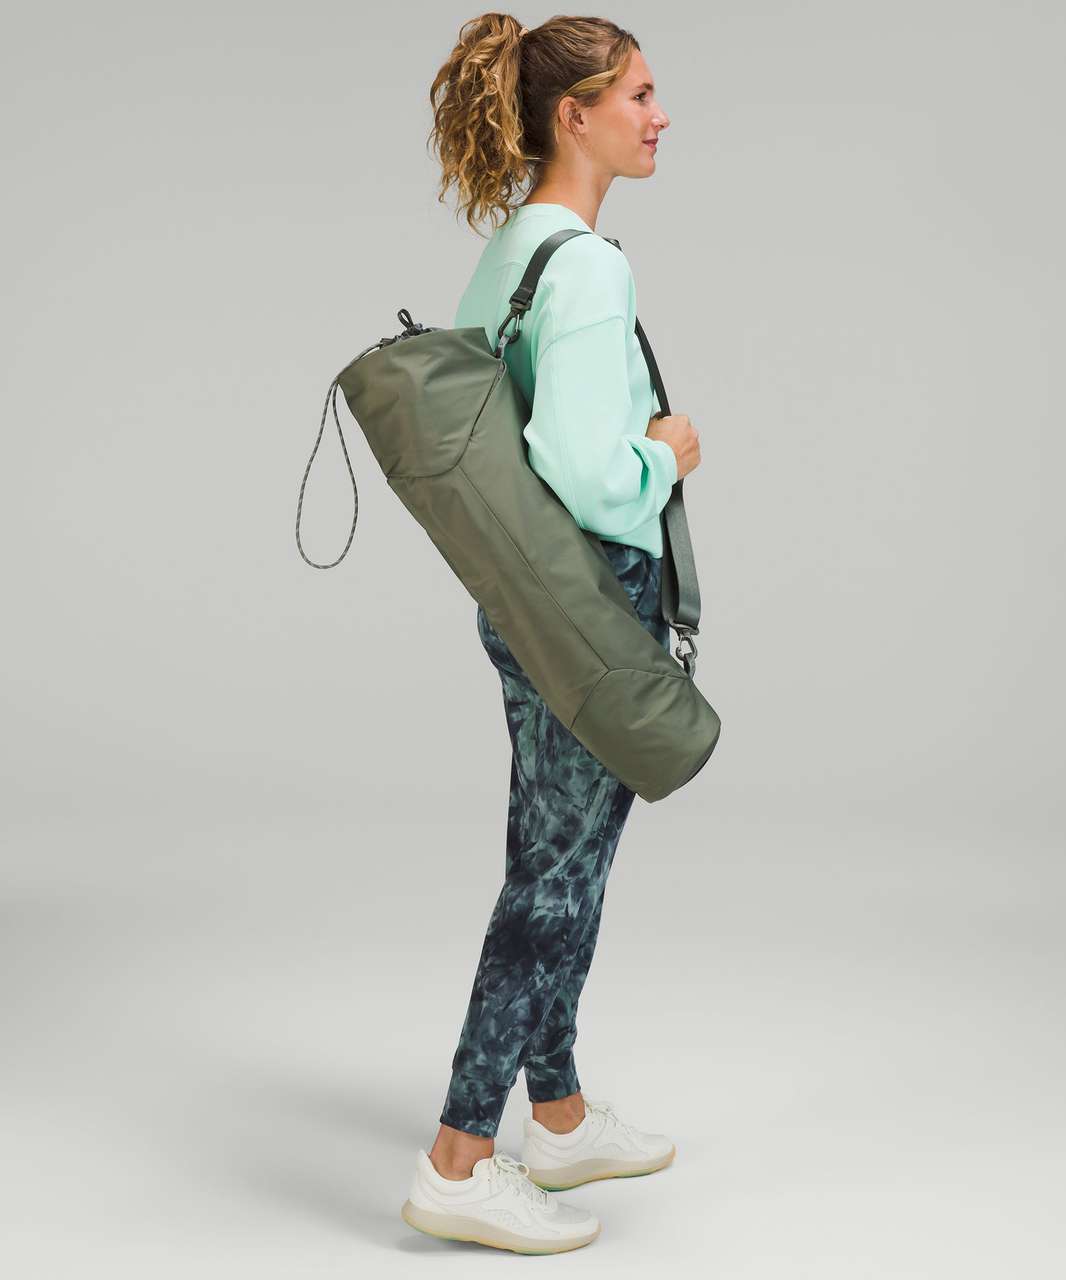 Lululemon Adjustable Yoga Mat Bag - BNWT, Sports Equipment